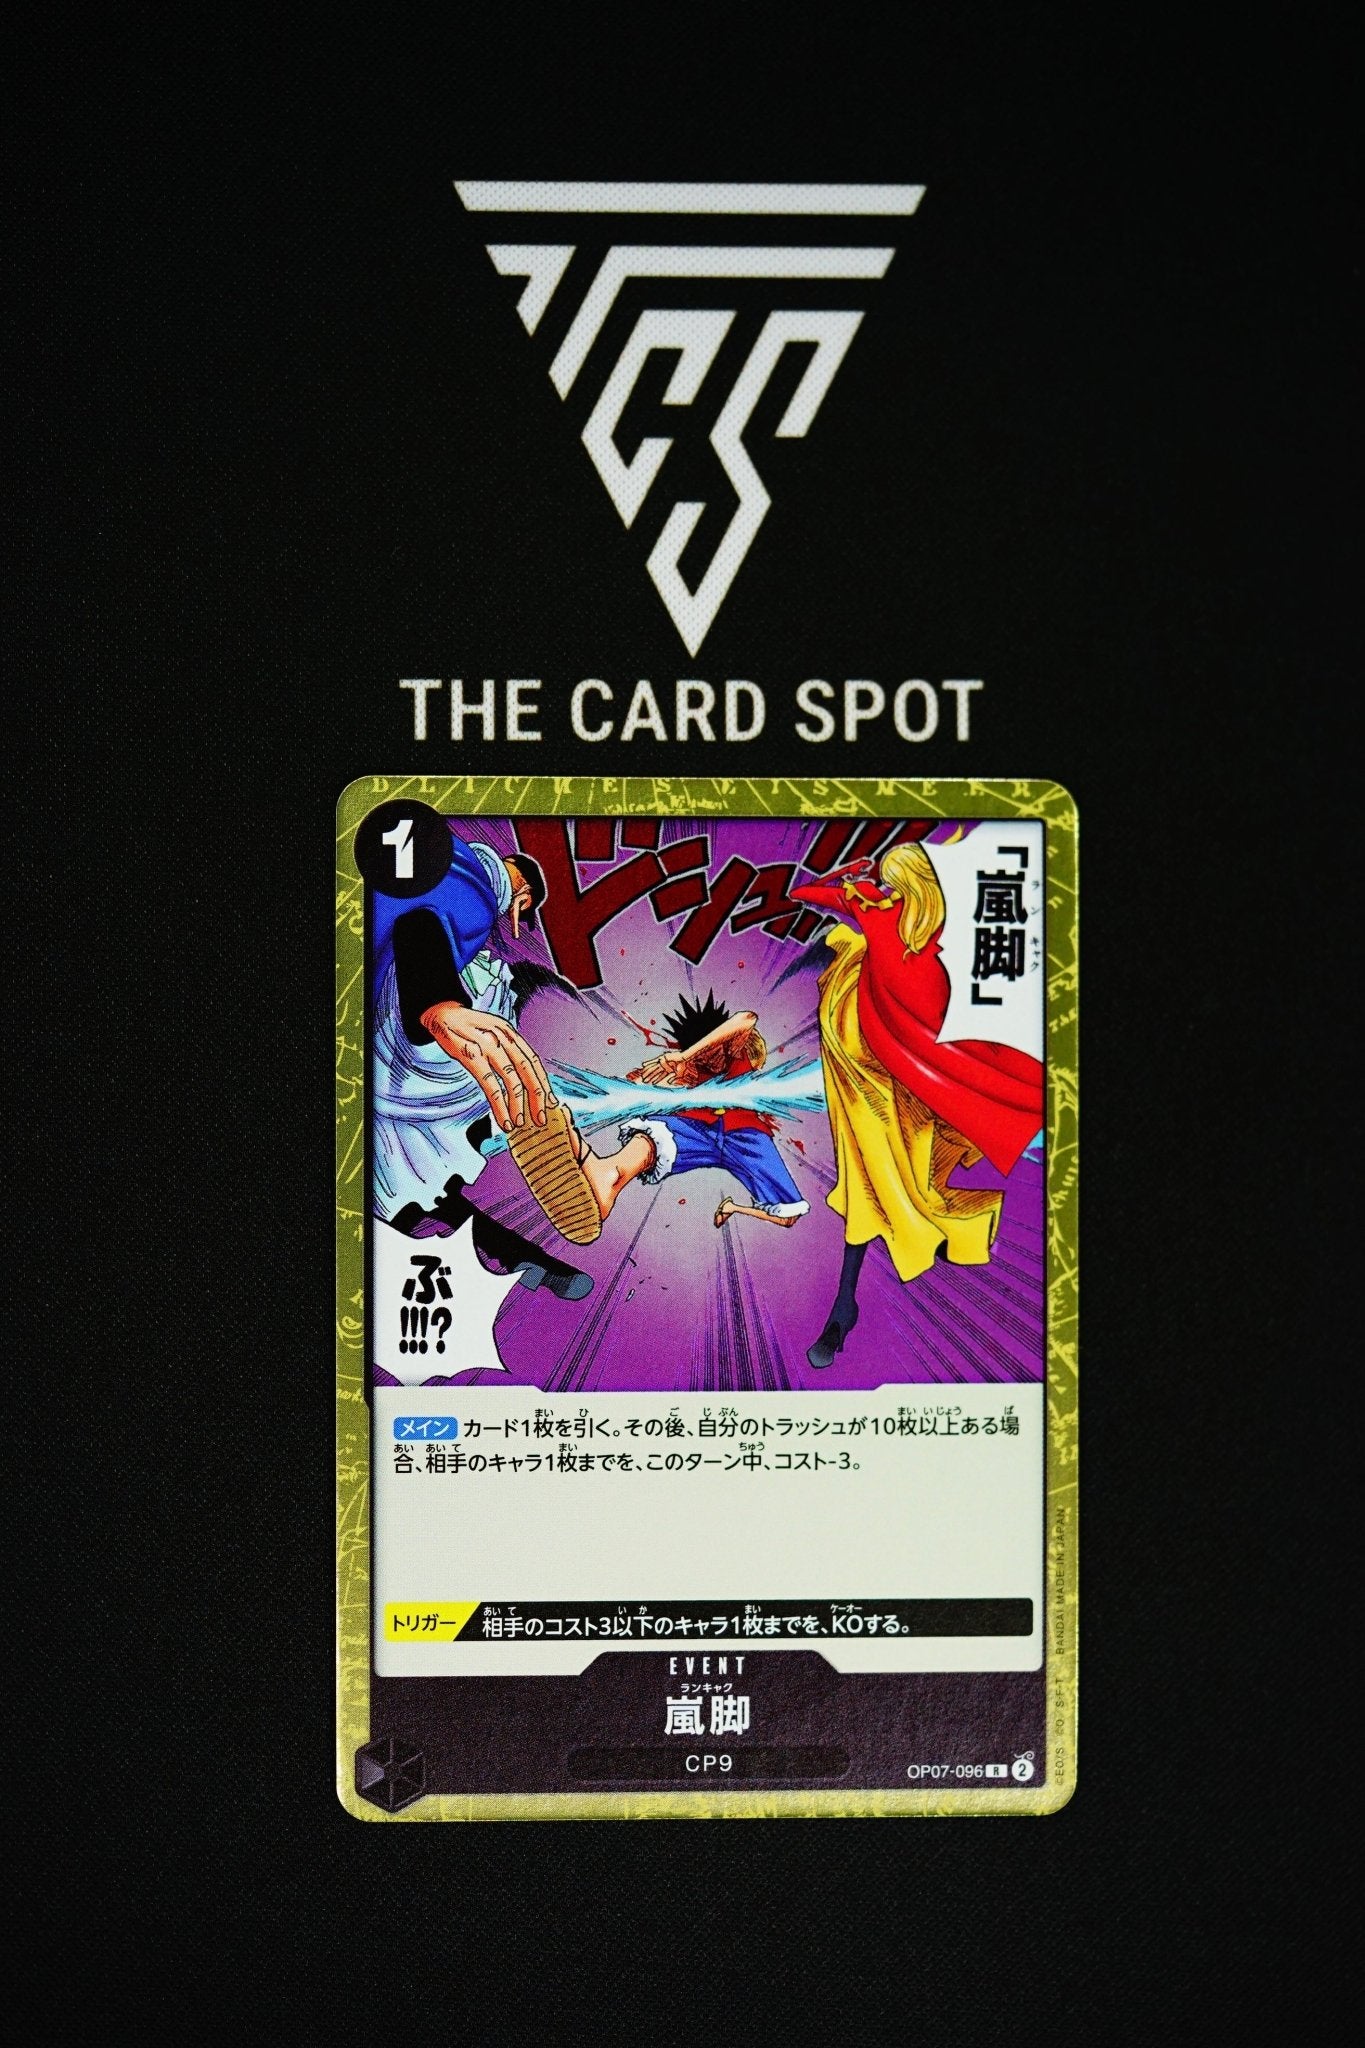 OP07-096 R Tempest Kick - One Piece - THE CARD SPOT PTY LTD.One Piece CardsONE PIECE